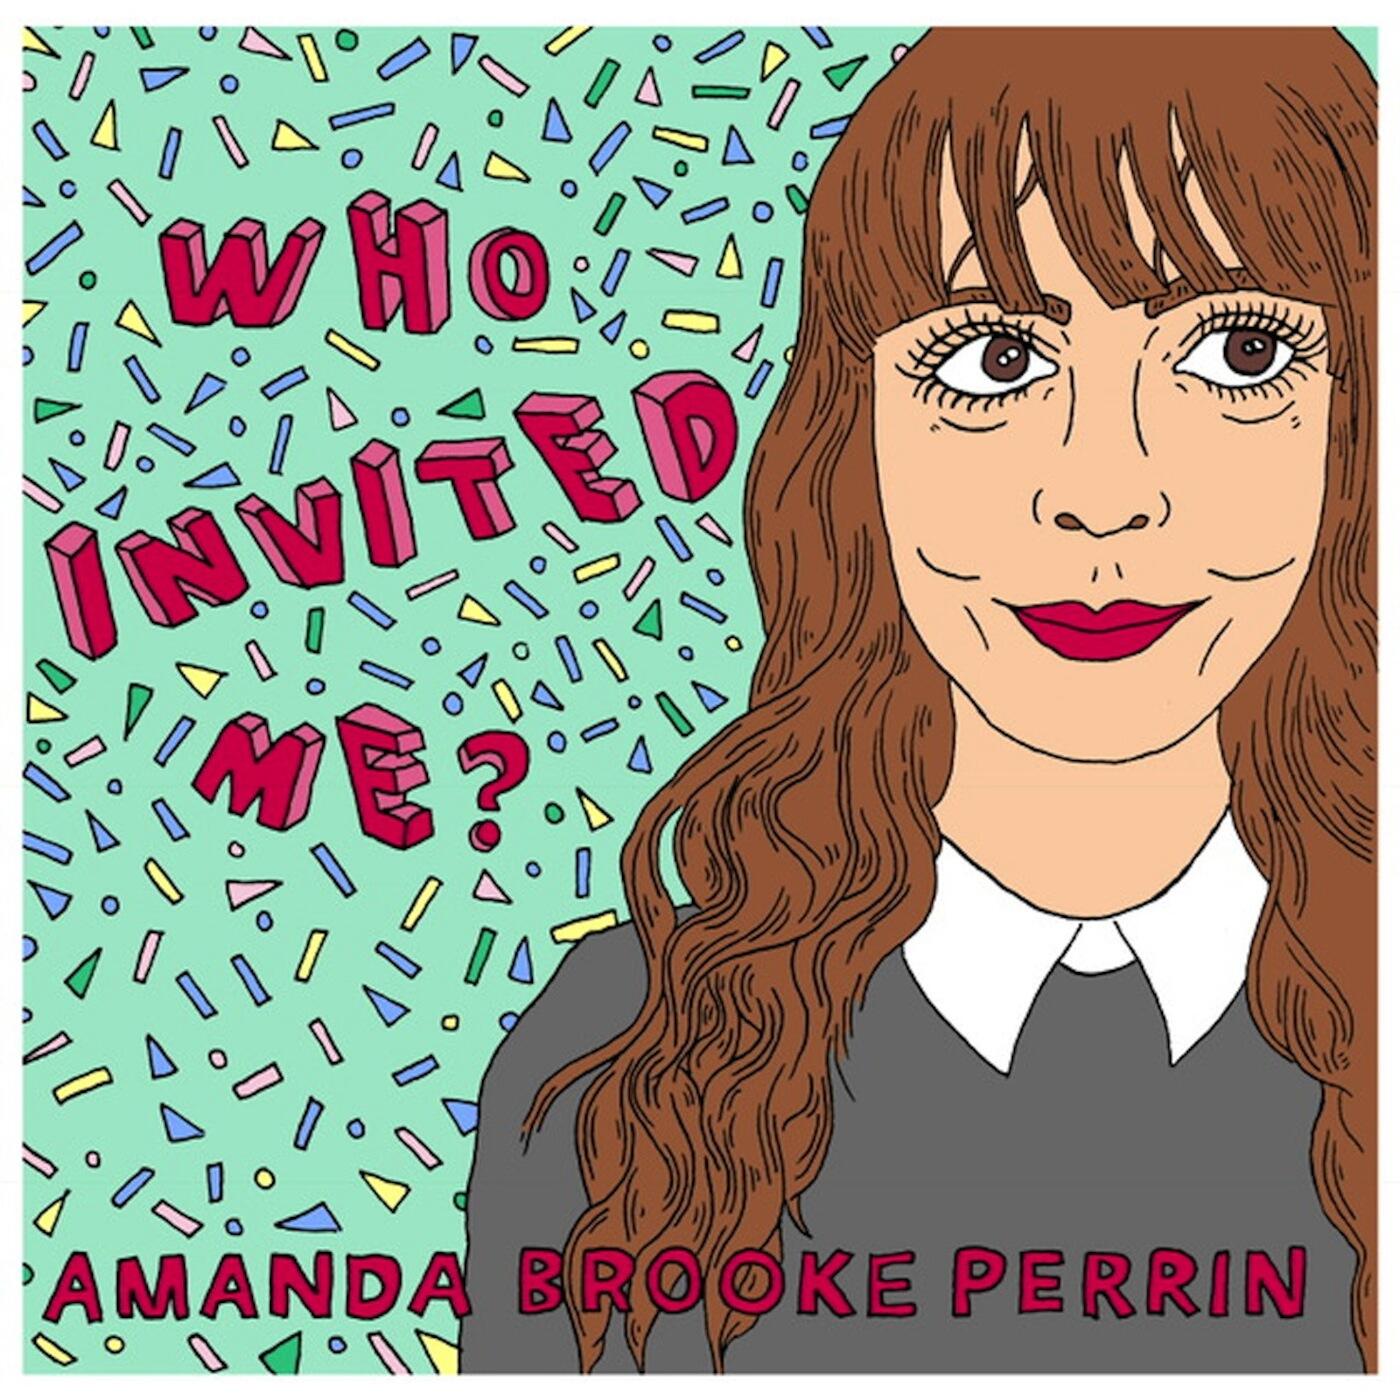 Amanda Episode 11. Who invited the Radio. Who did Amanda write to.